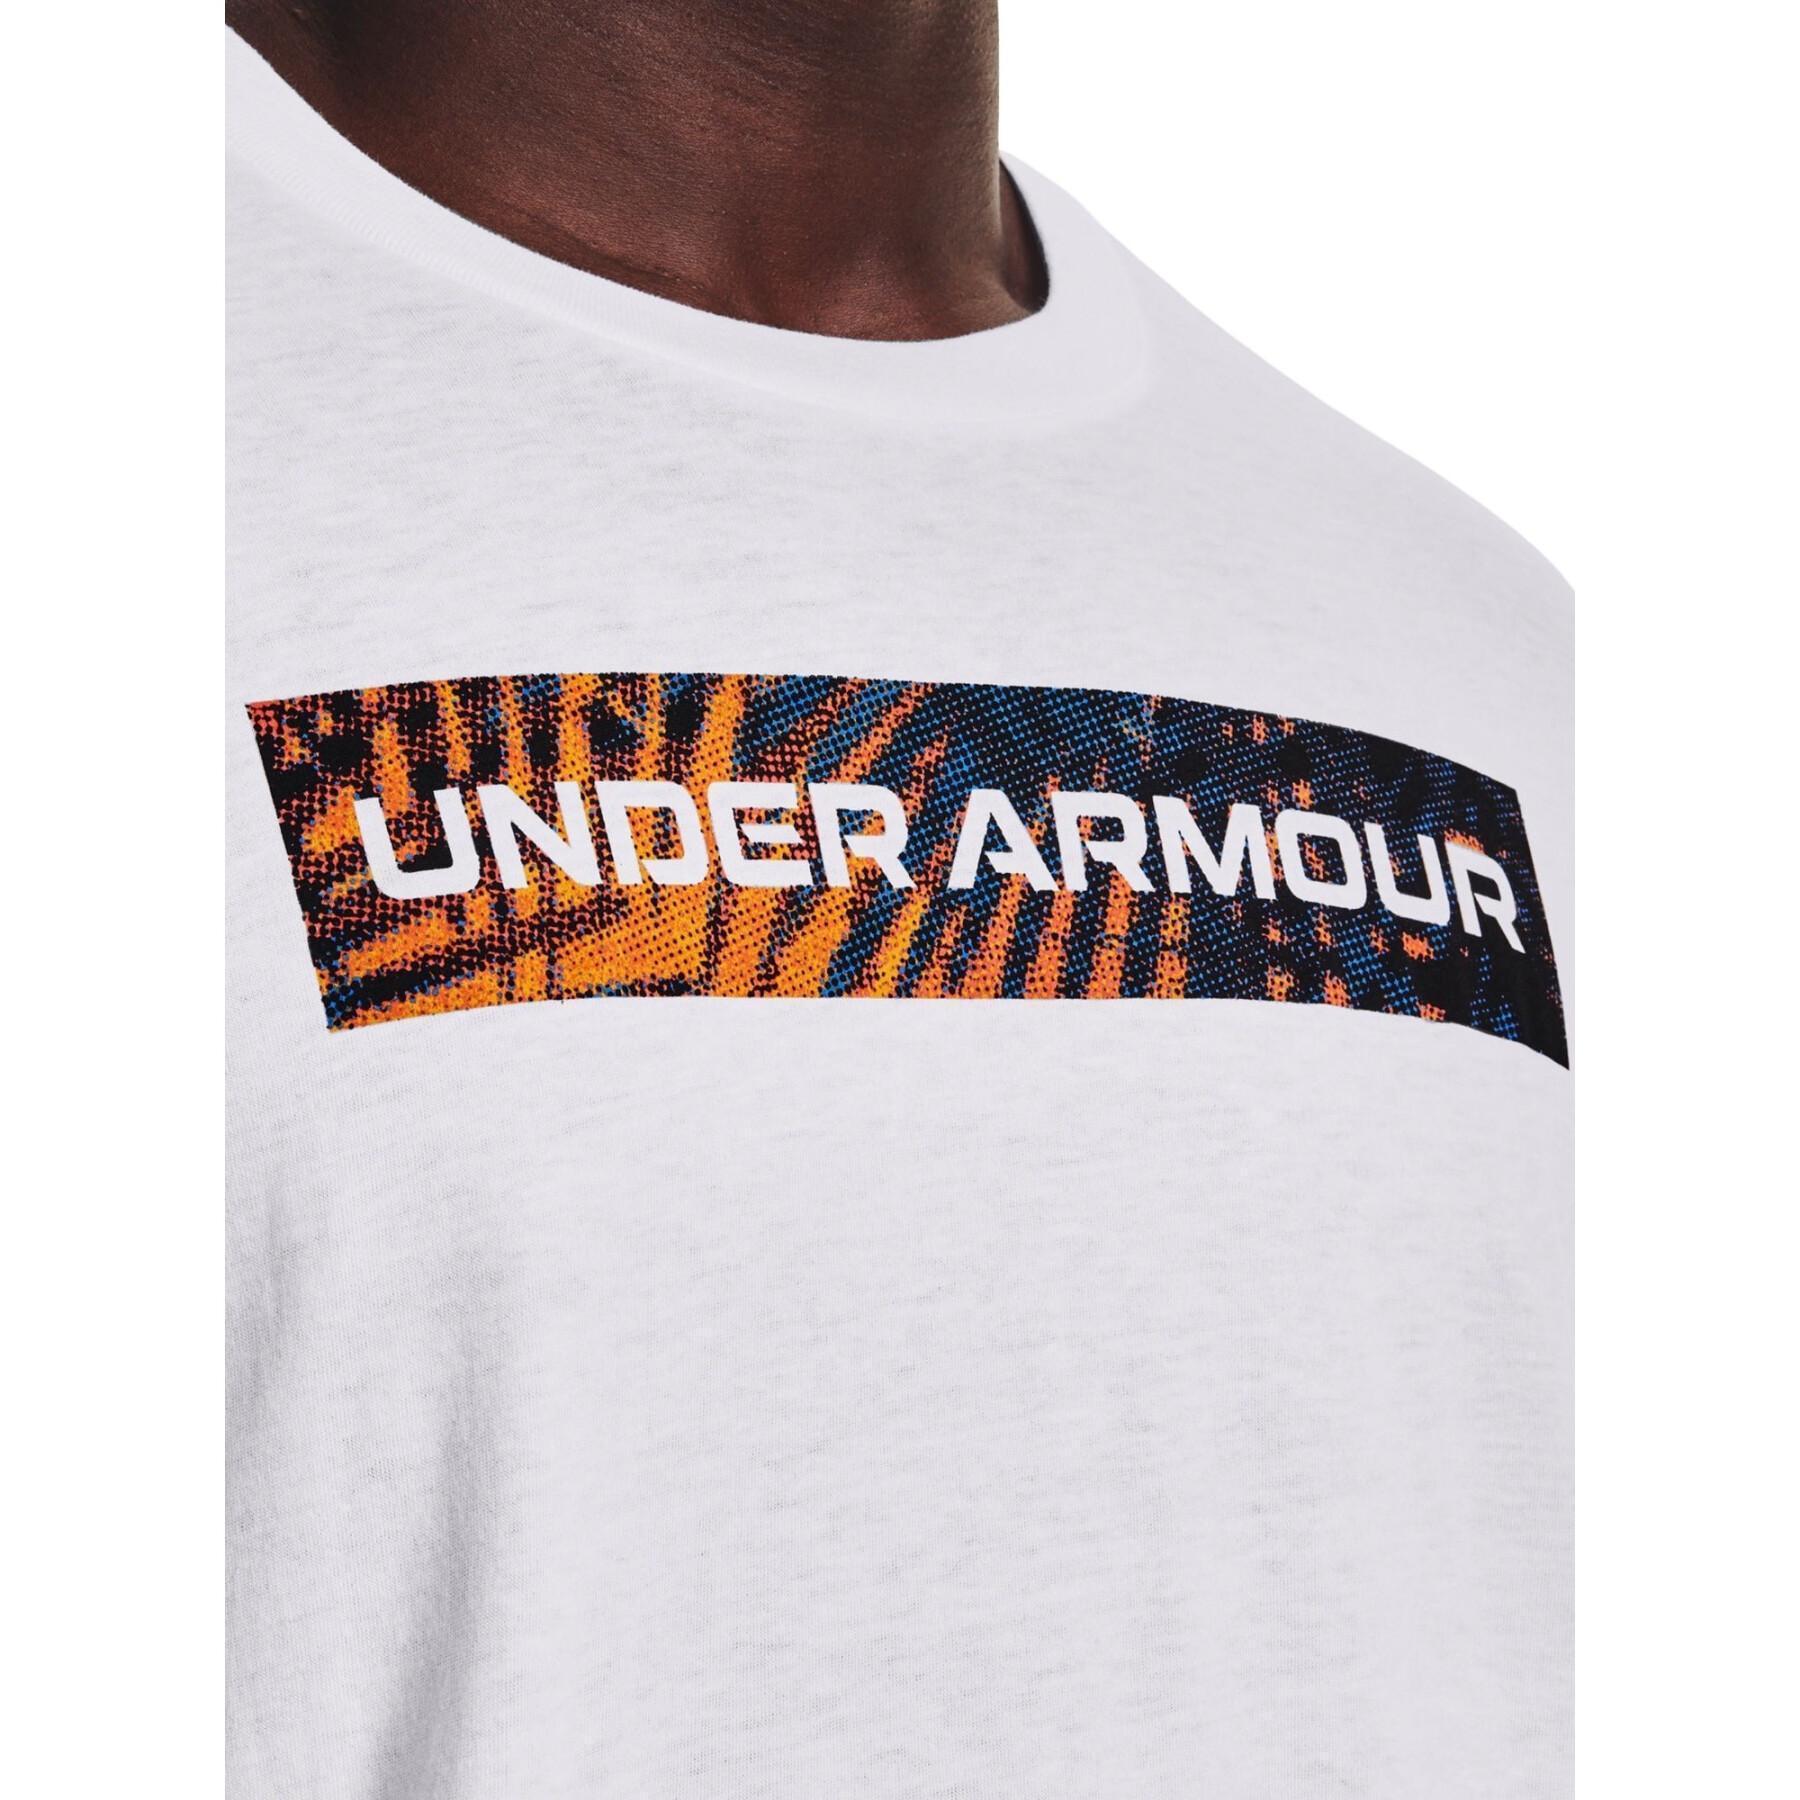 Camiseta Under Armour wordmark print fill